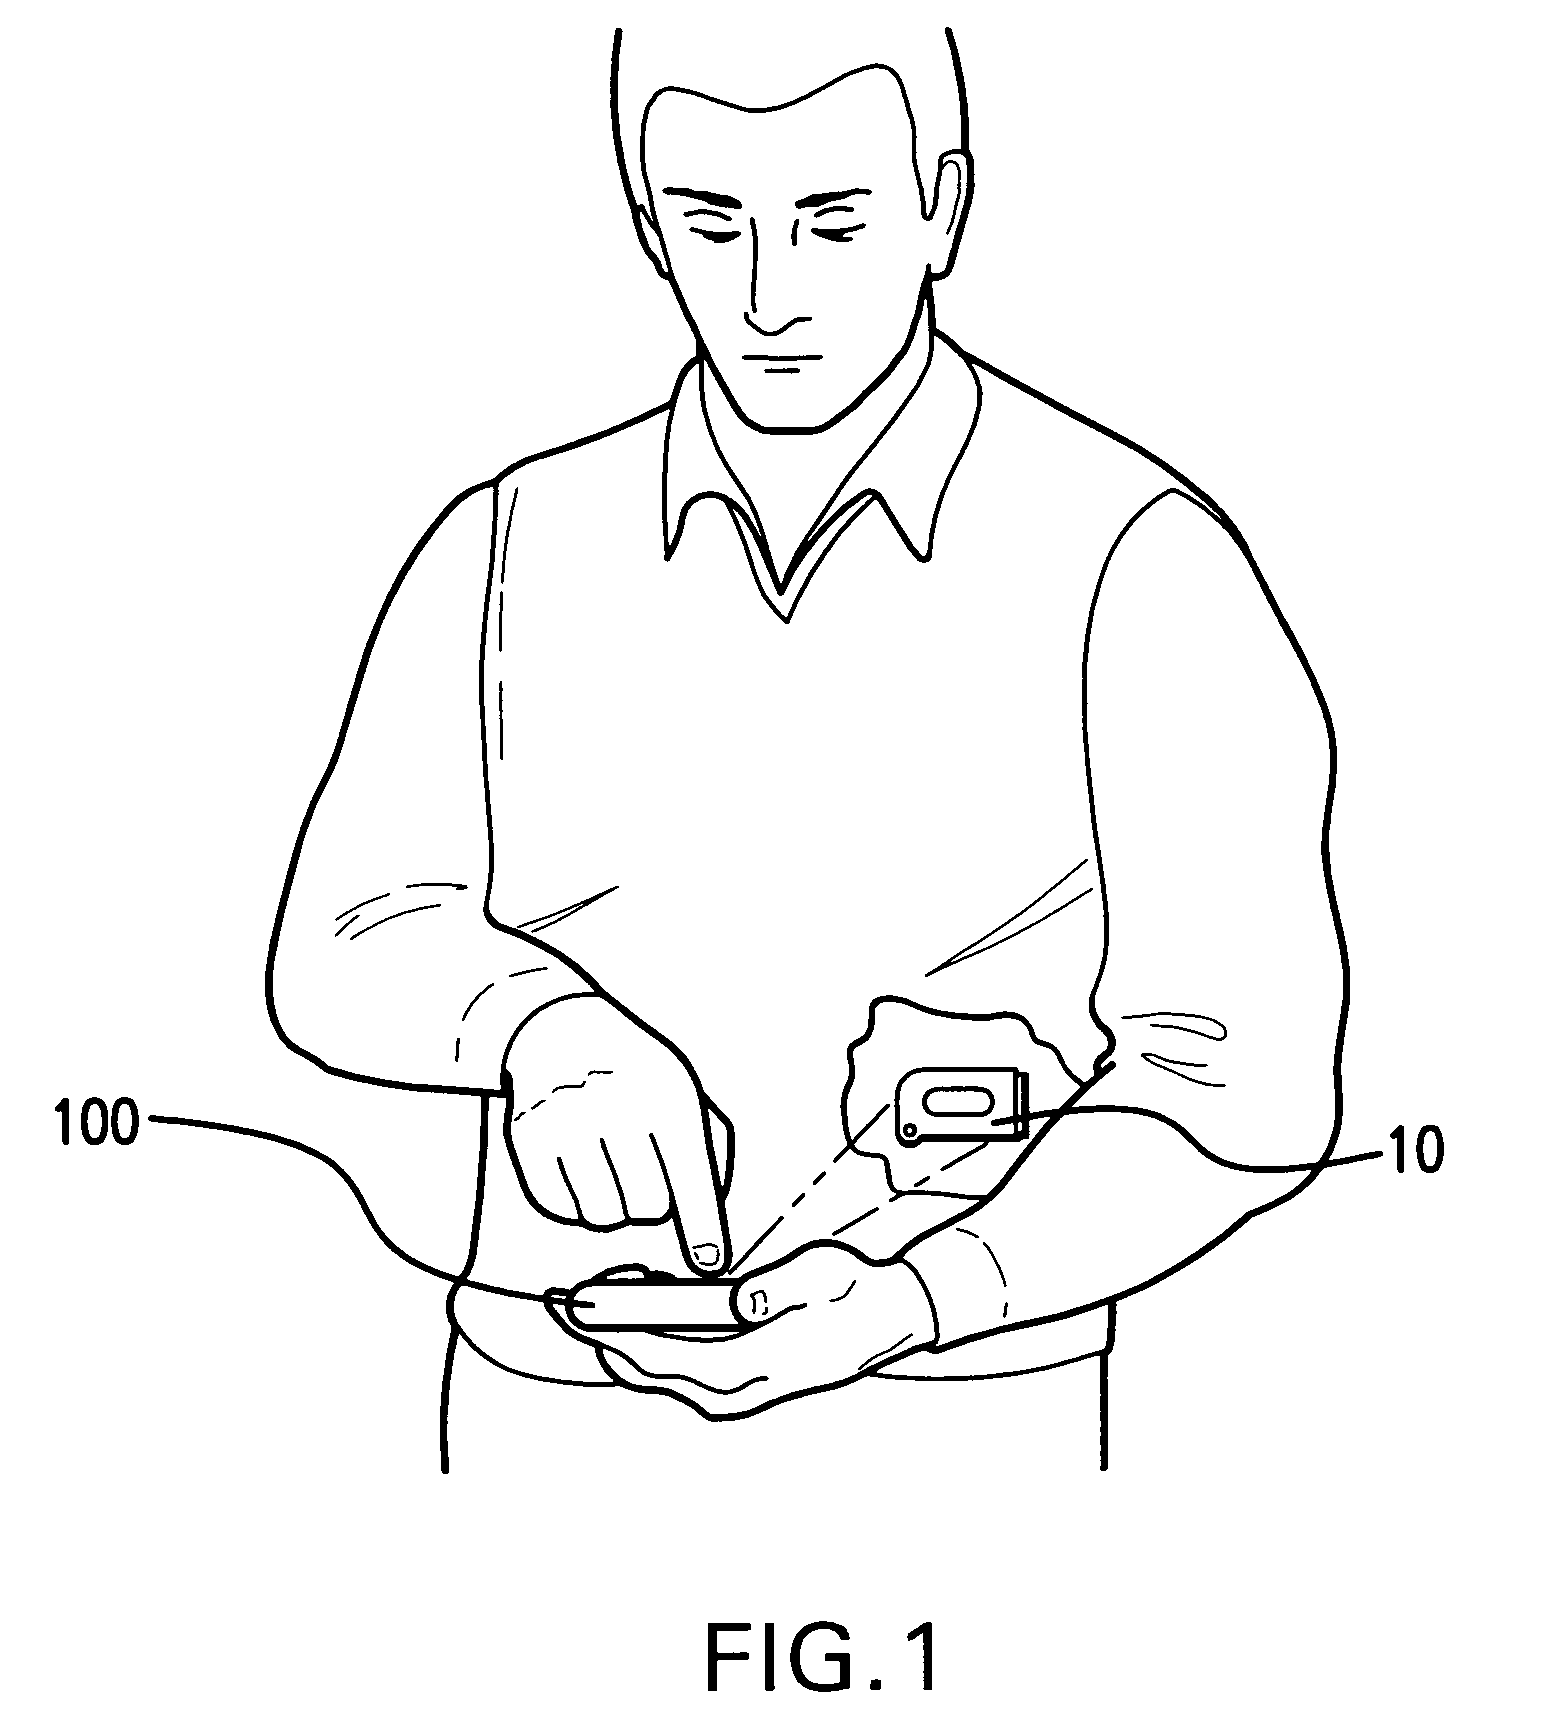 RF medical device